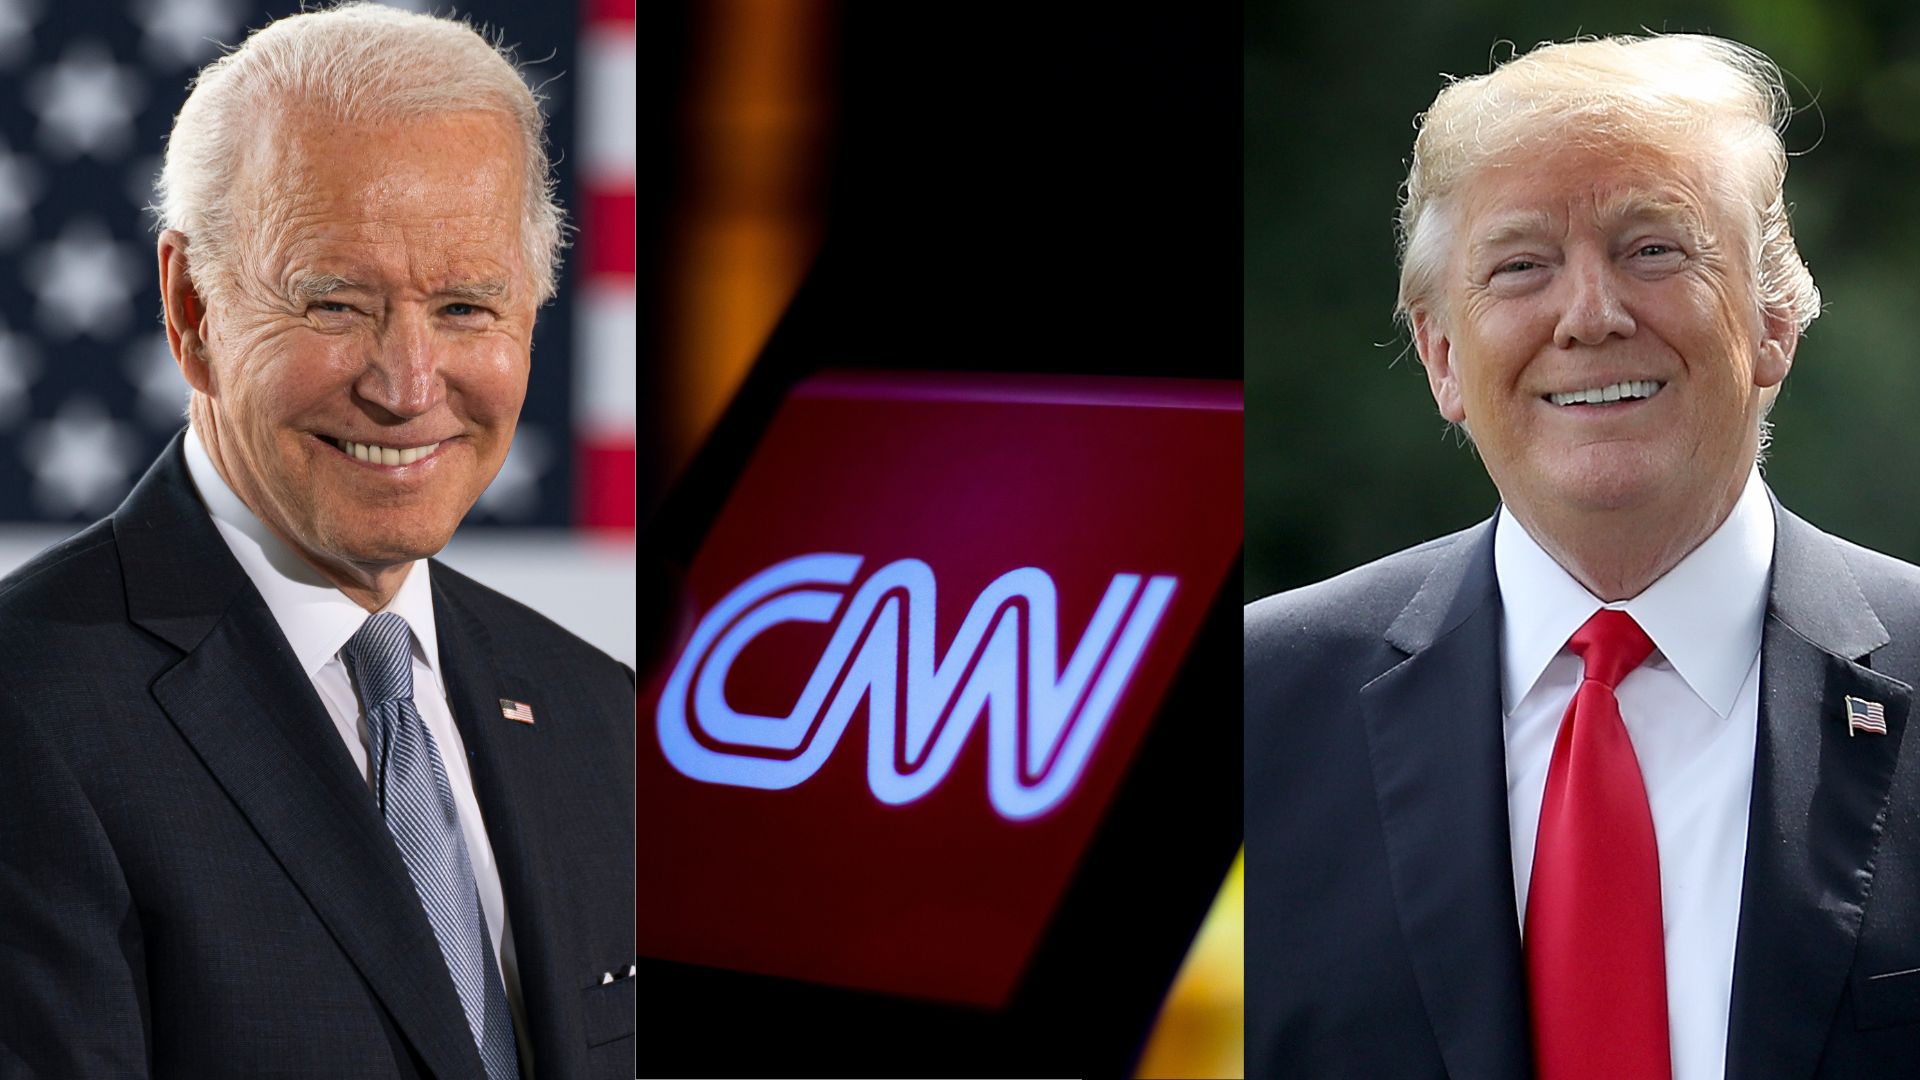 CNN journalist criticized for promoting Biden merchandise before debate